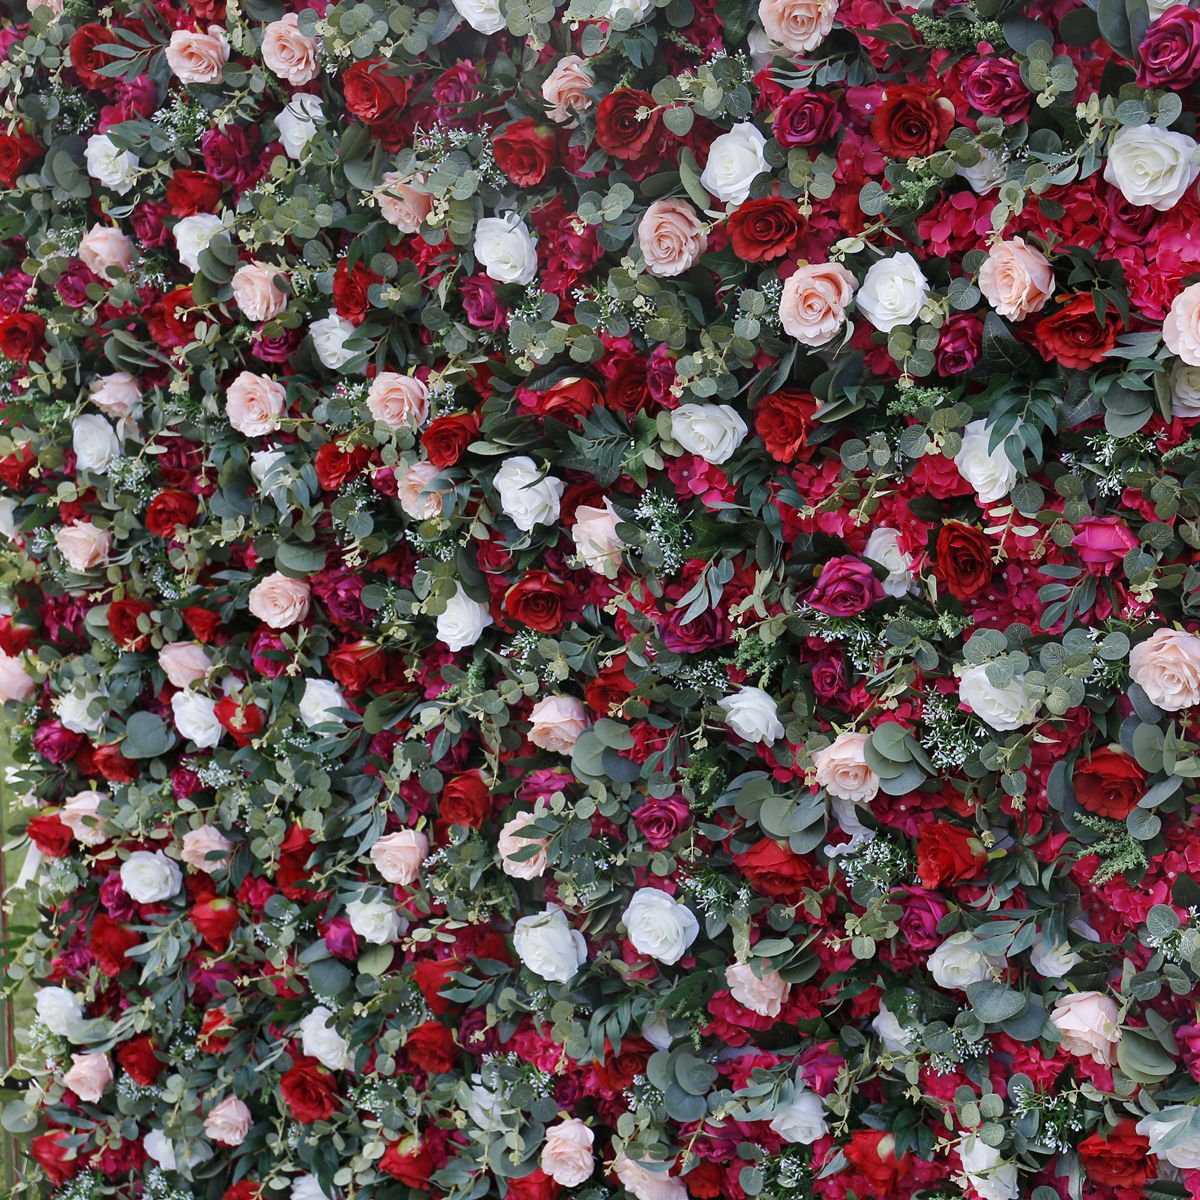 Alas Series 5D Kain Ngisor Wedding Background Flower Wall Simulasi Rose Arrangement